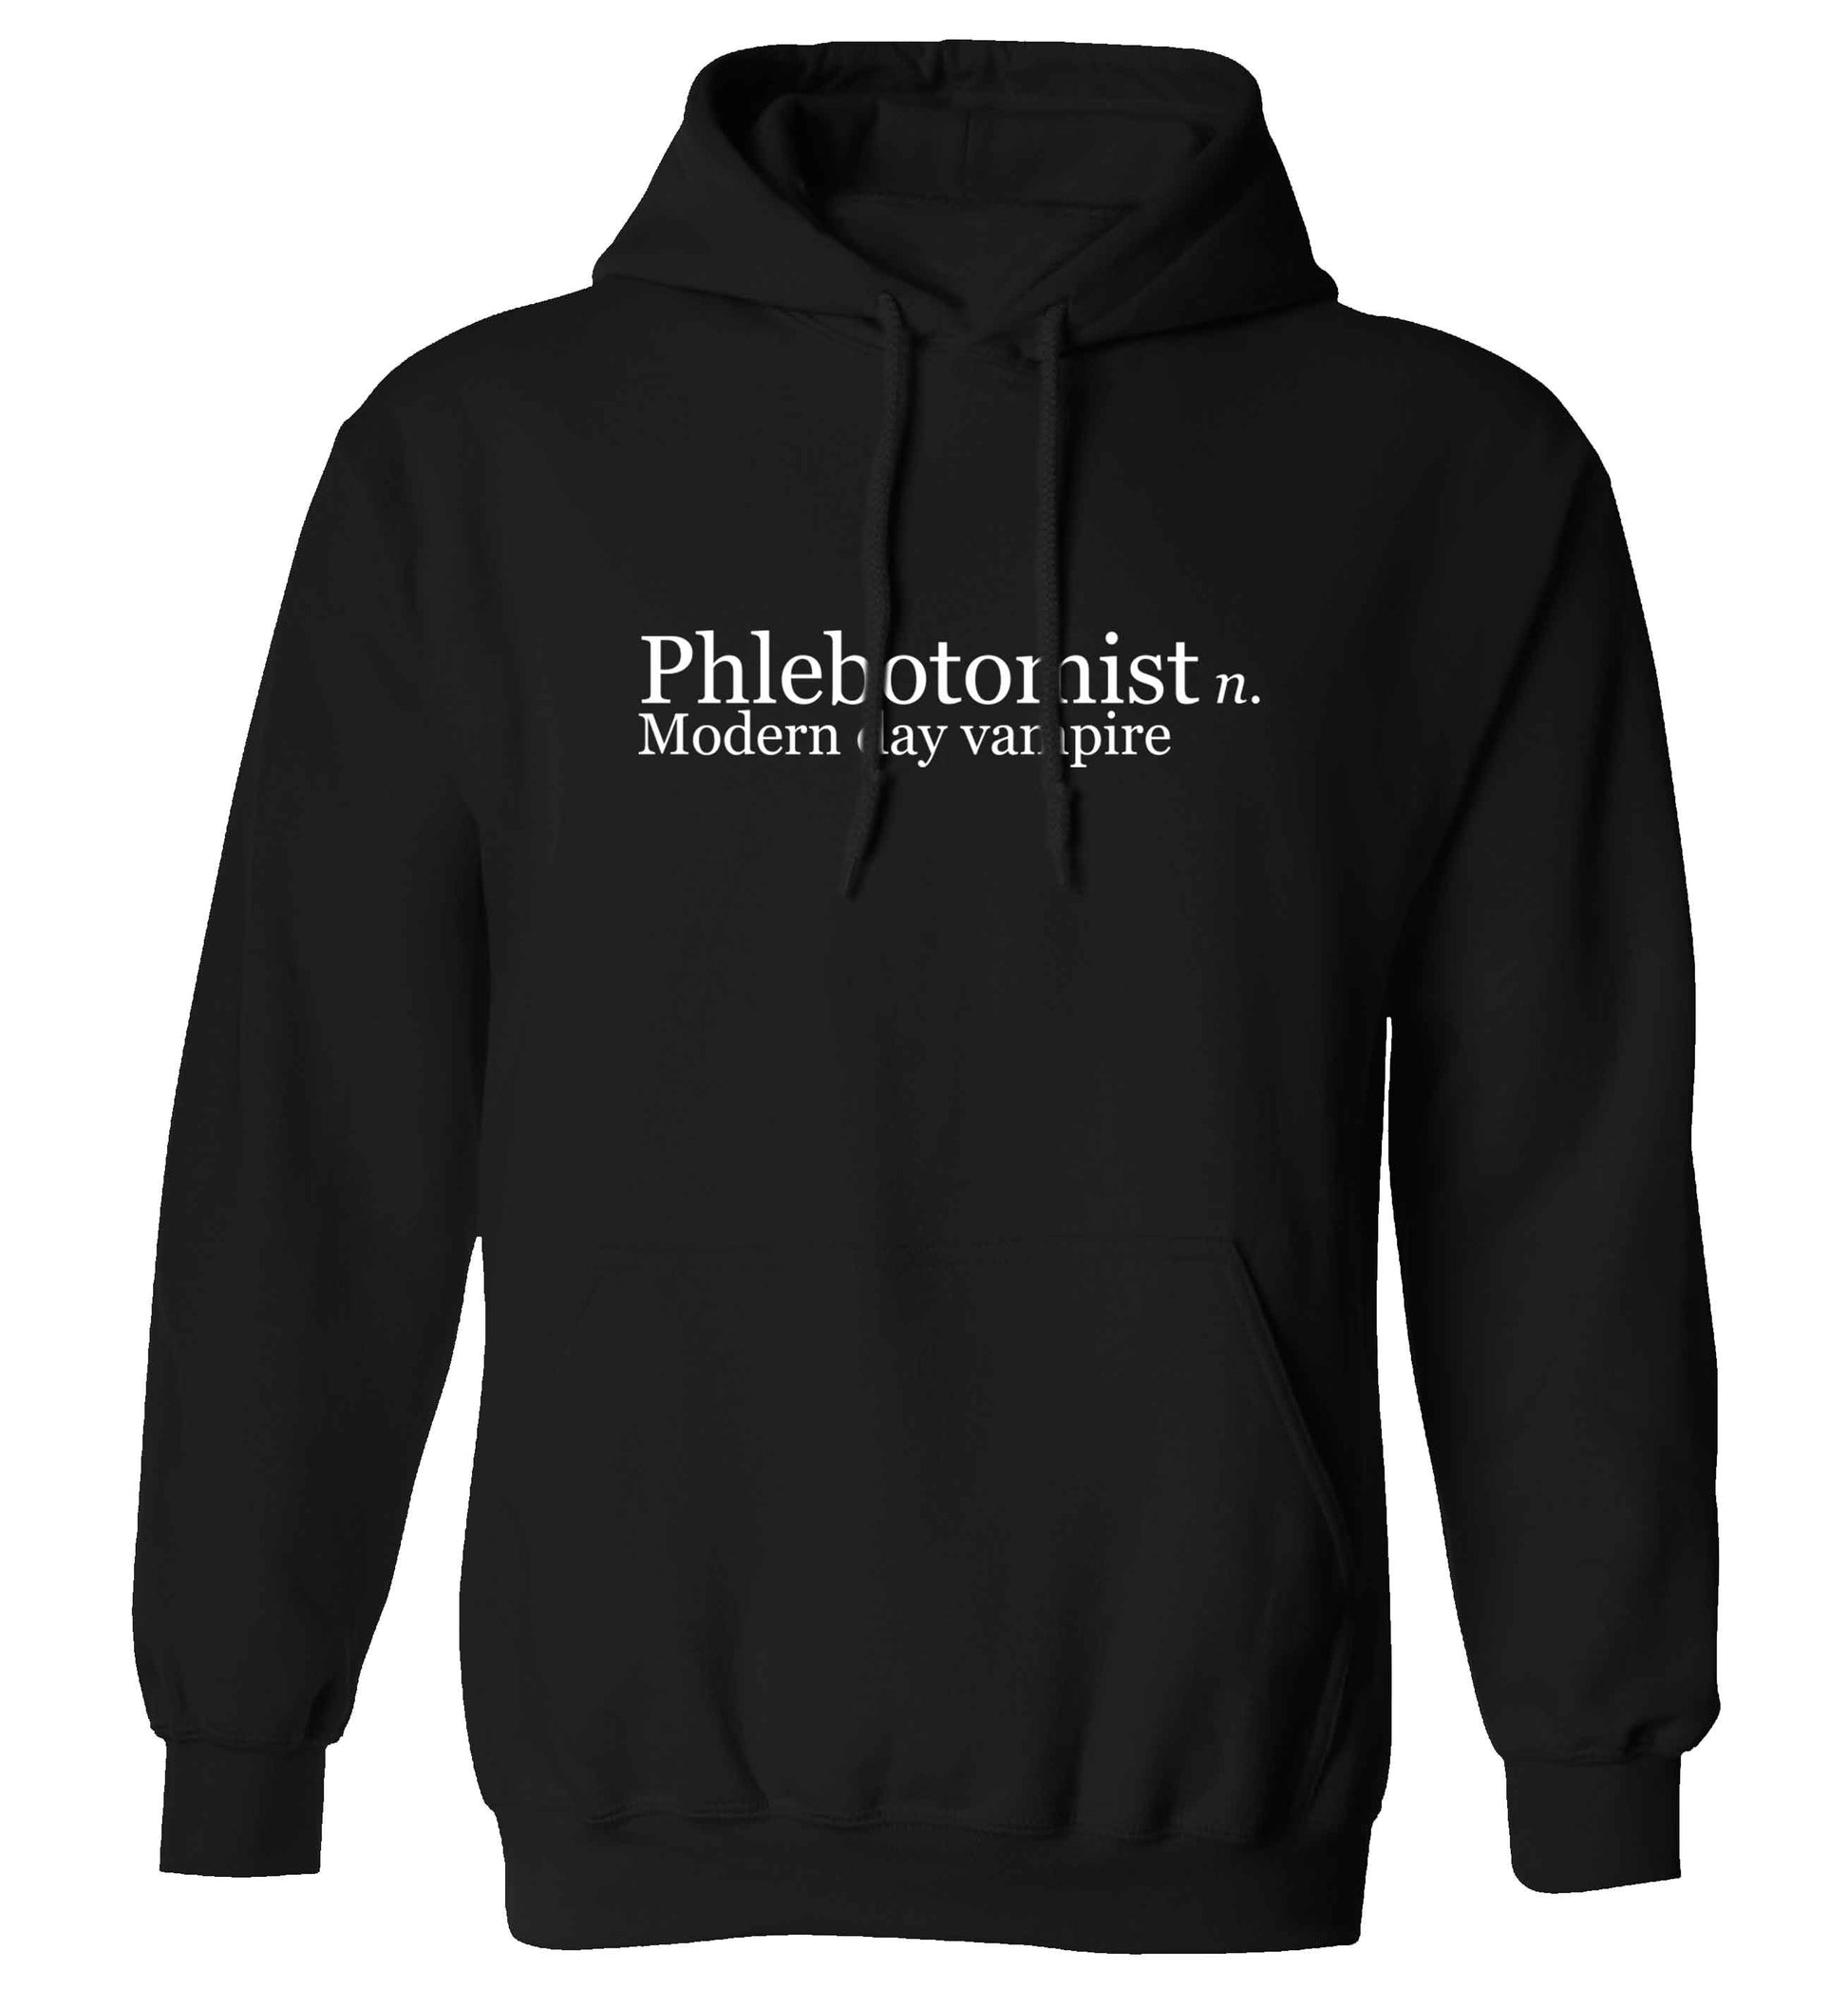 Phlebotomist - Modern day vampire adults unisex black hoodie 2XL